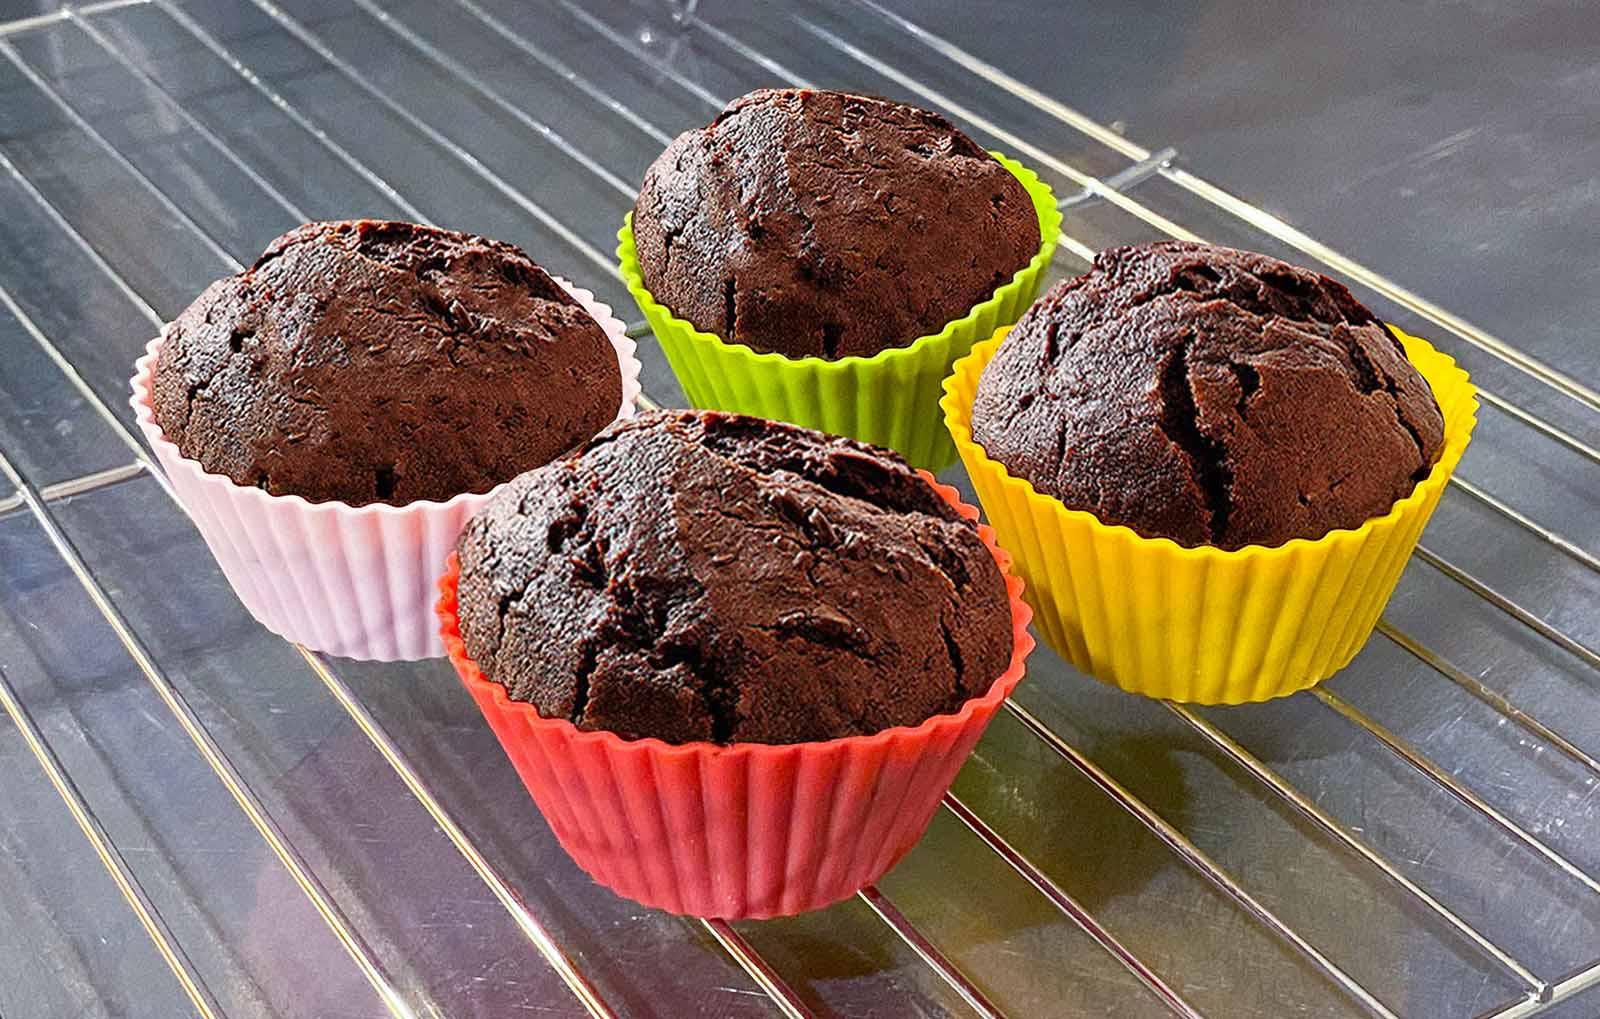 Easy air fryer recipe - Chocolate muffins.jpg